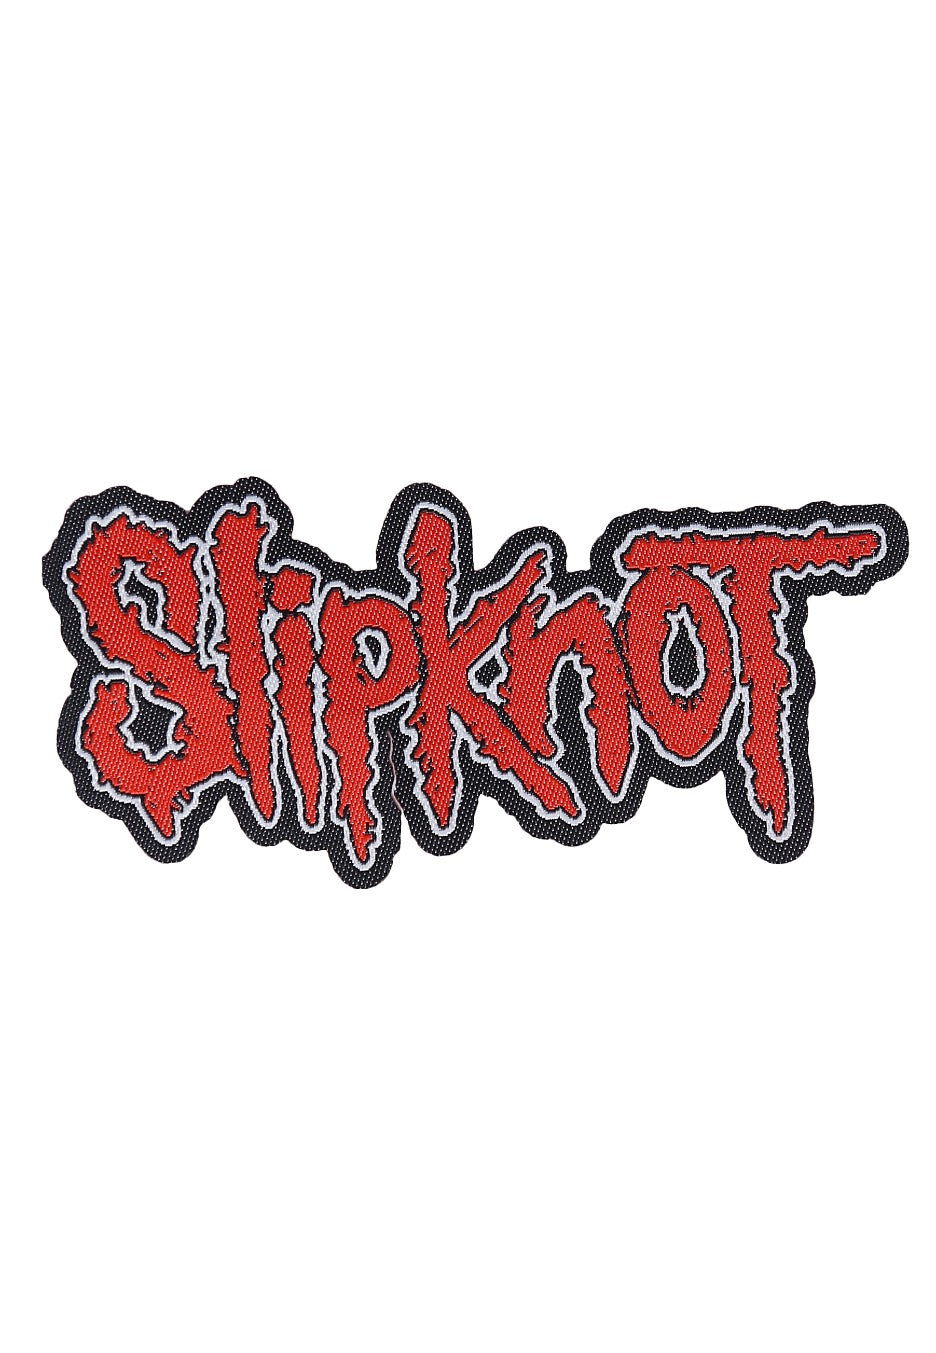 Slipknot - Die Cut Logo - Patch